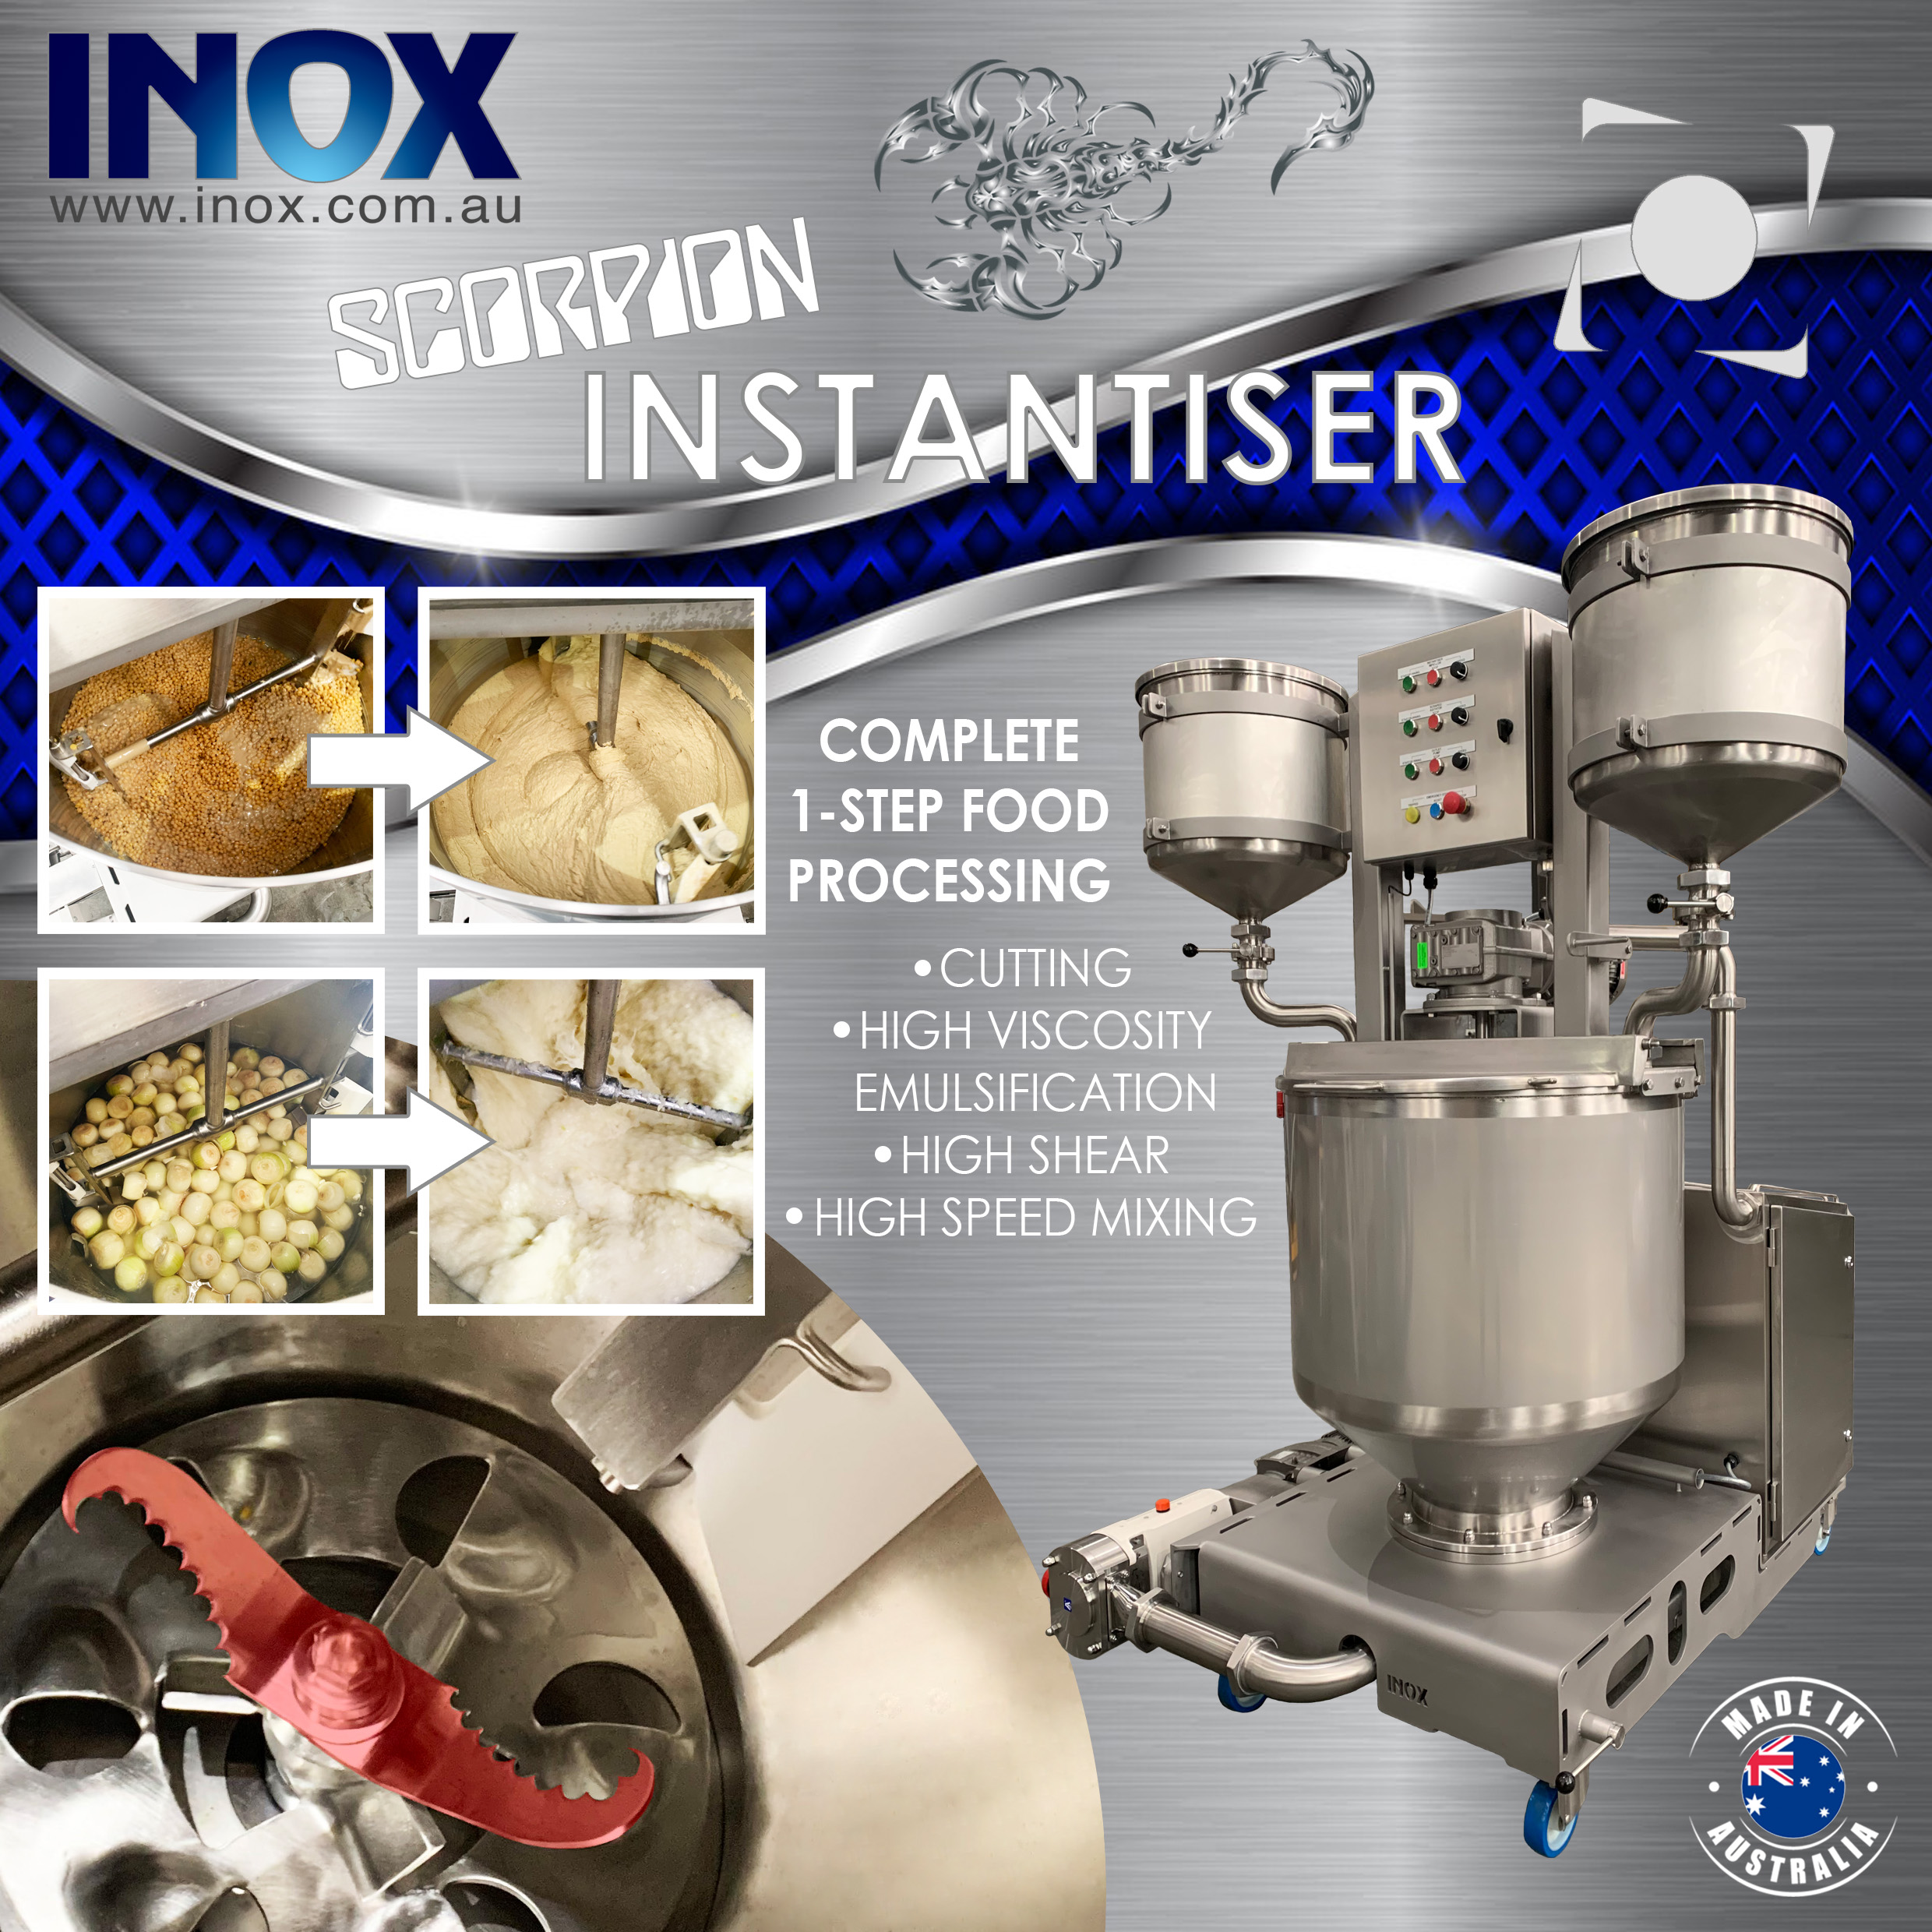 New Product - INOX Scorpion Instantiser - Food Processing